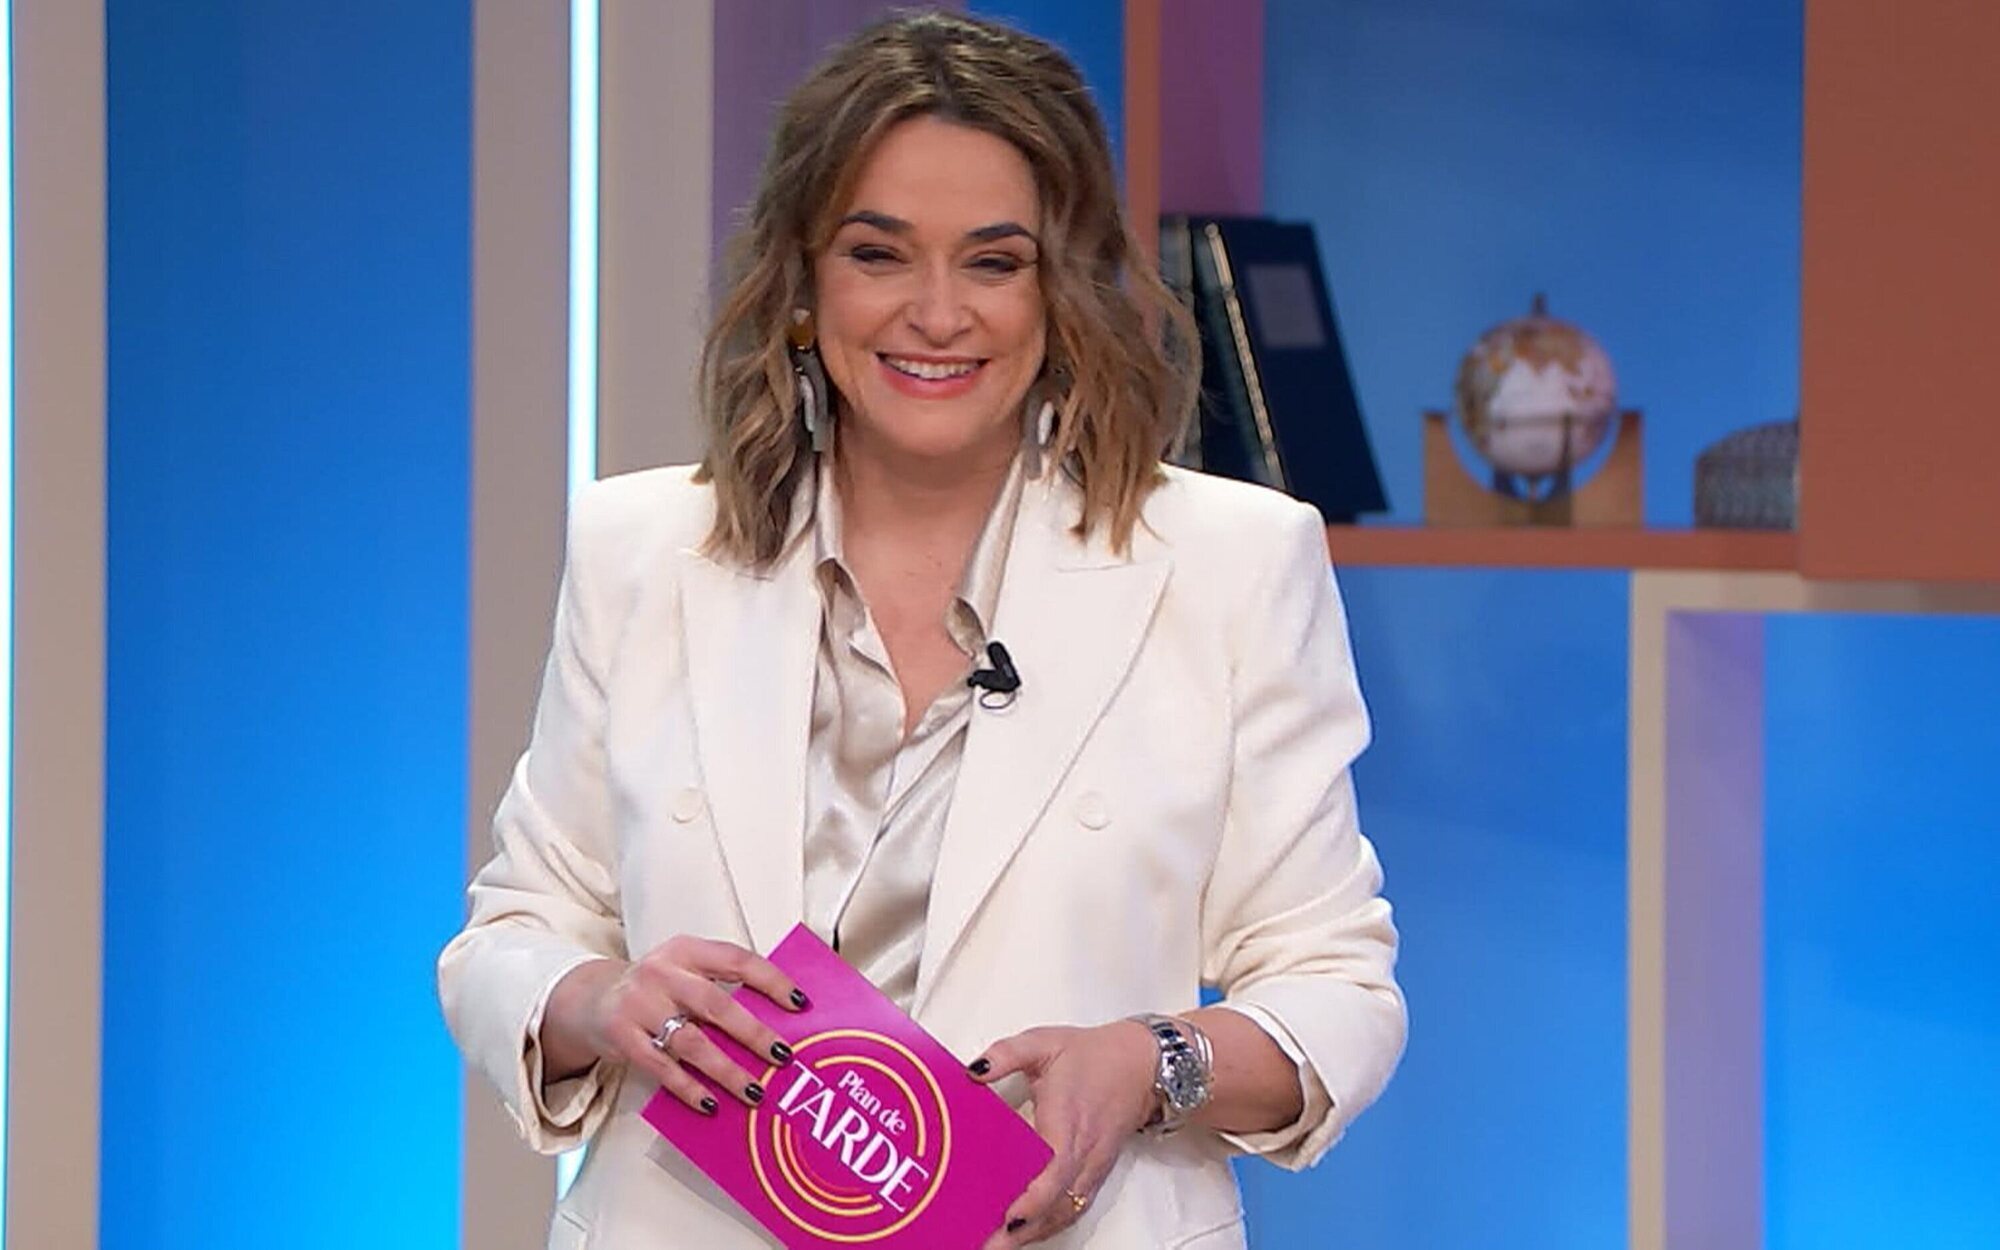 Adiós al 'Plan de tarde' de Toñi Moreno: RTVE cancela por sorpresa el programa de La 1